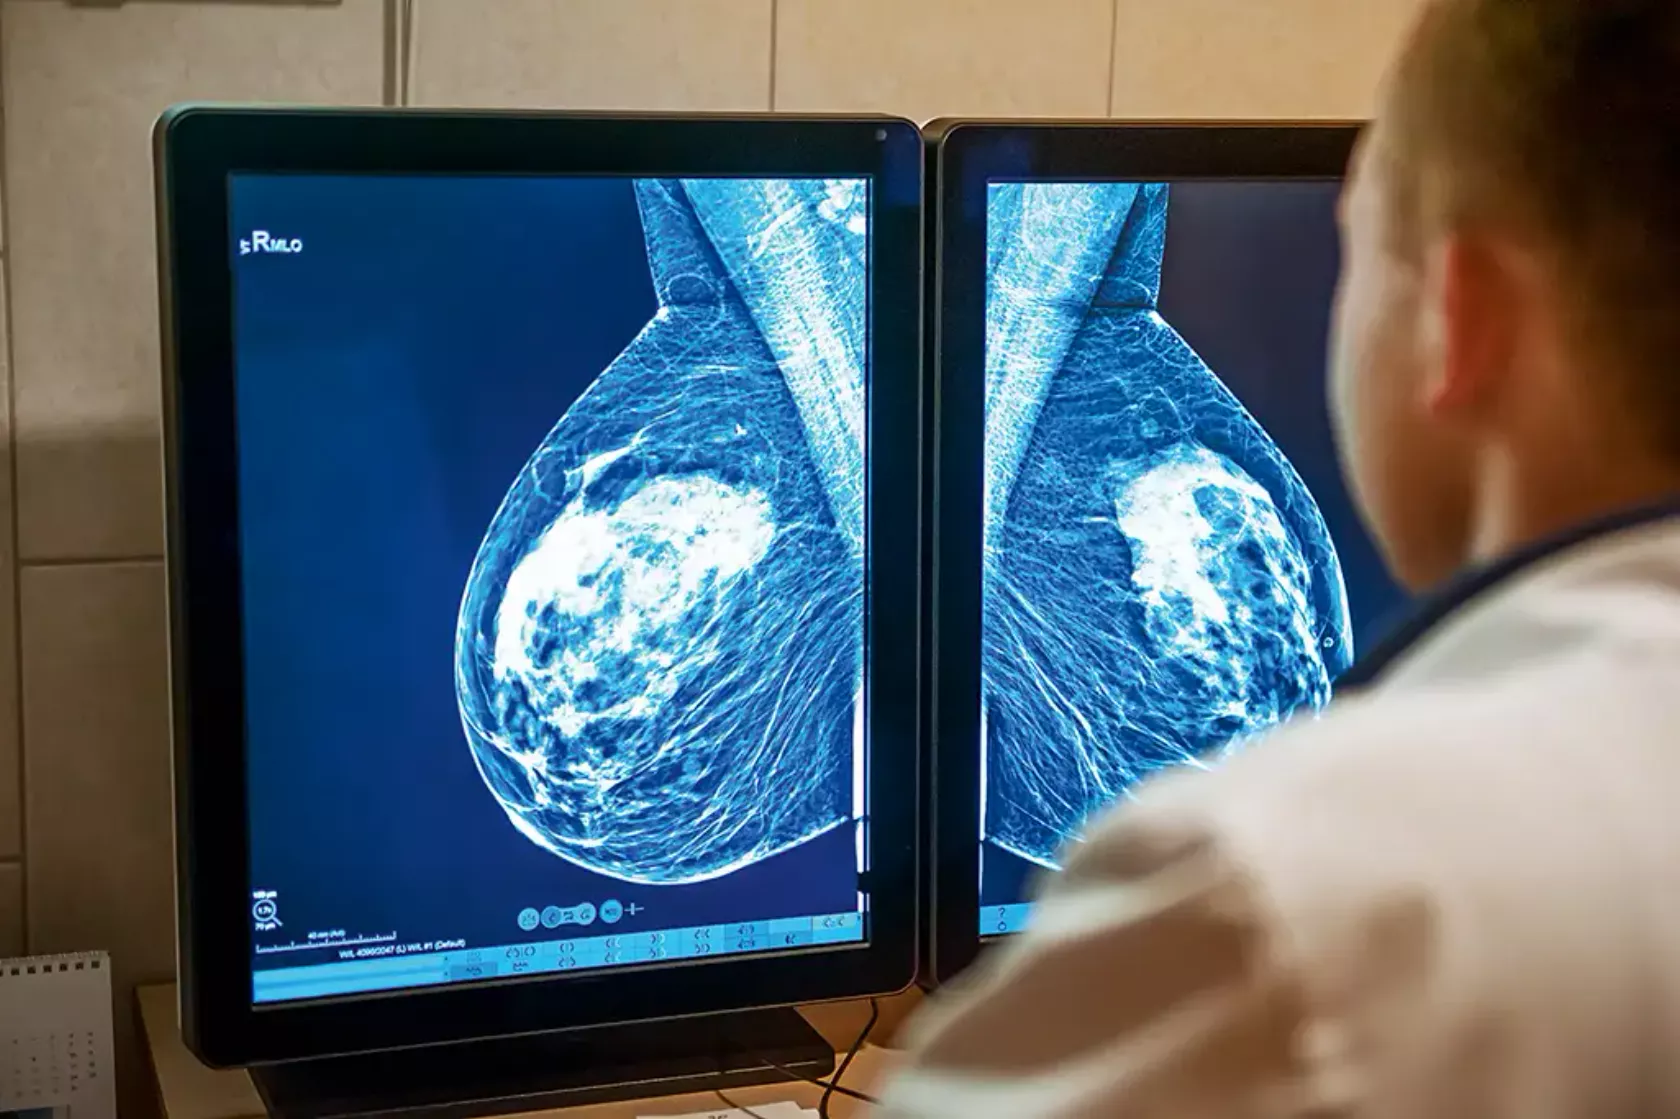 Arzt begutachtet am Monitor Mammographie-Aufnahmen.